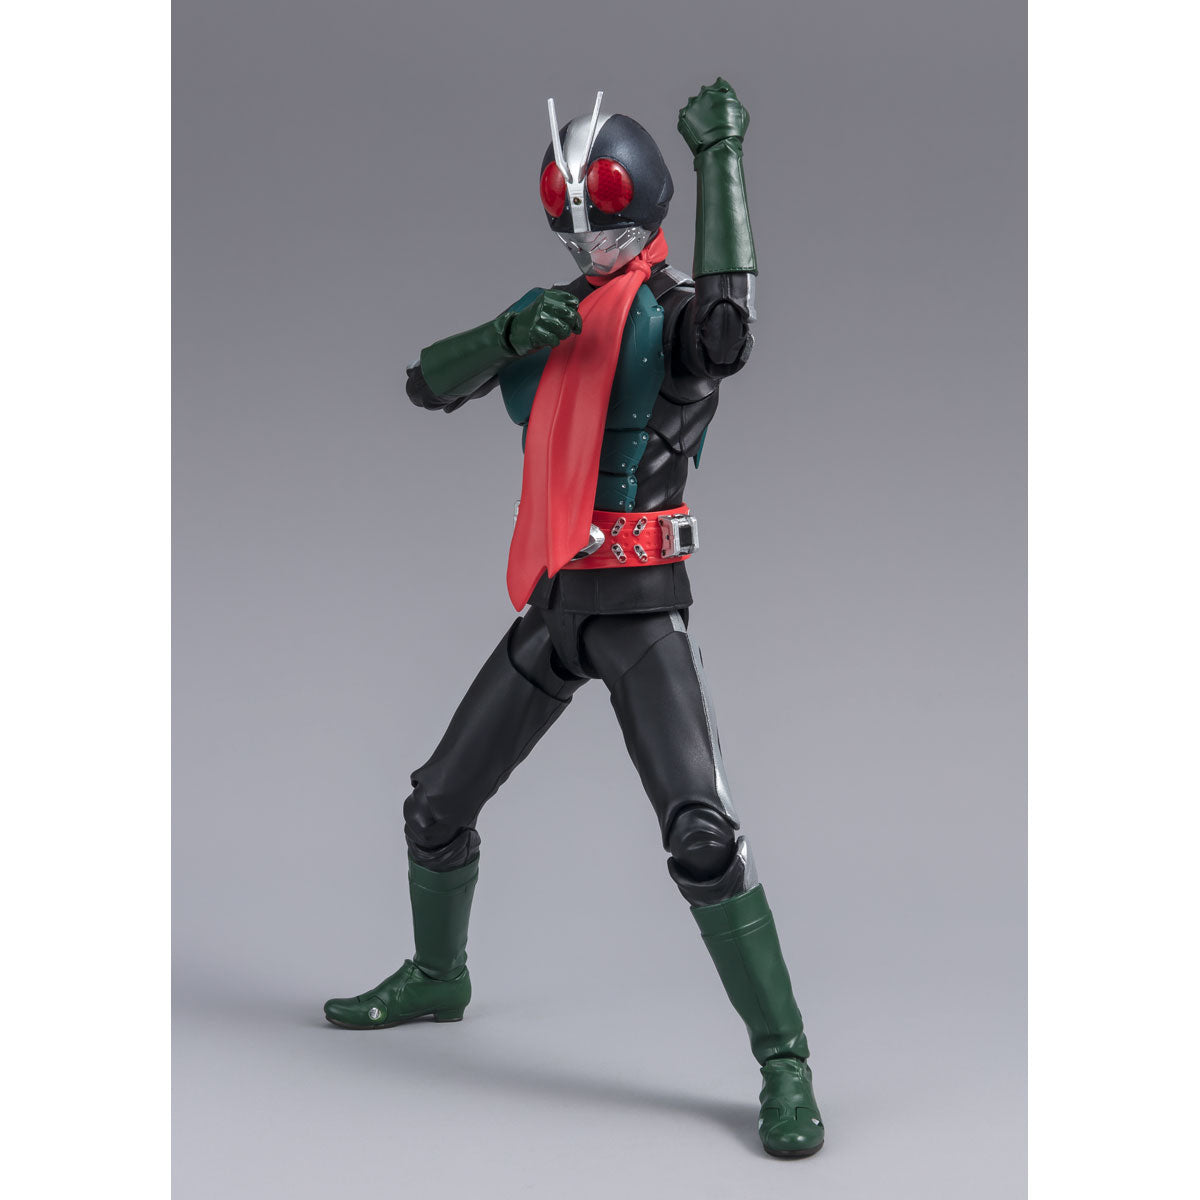 S.H. Figuarts Kamen Rider Masked Rider No.2 (Shin Masked Rider) Exclusive Action Figure